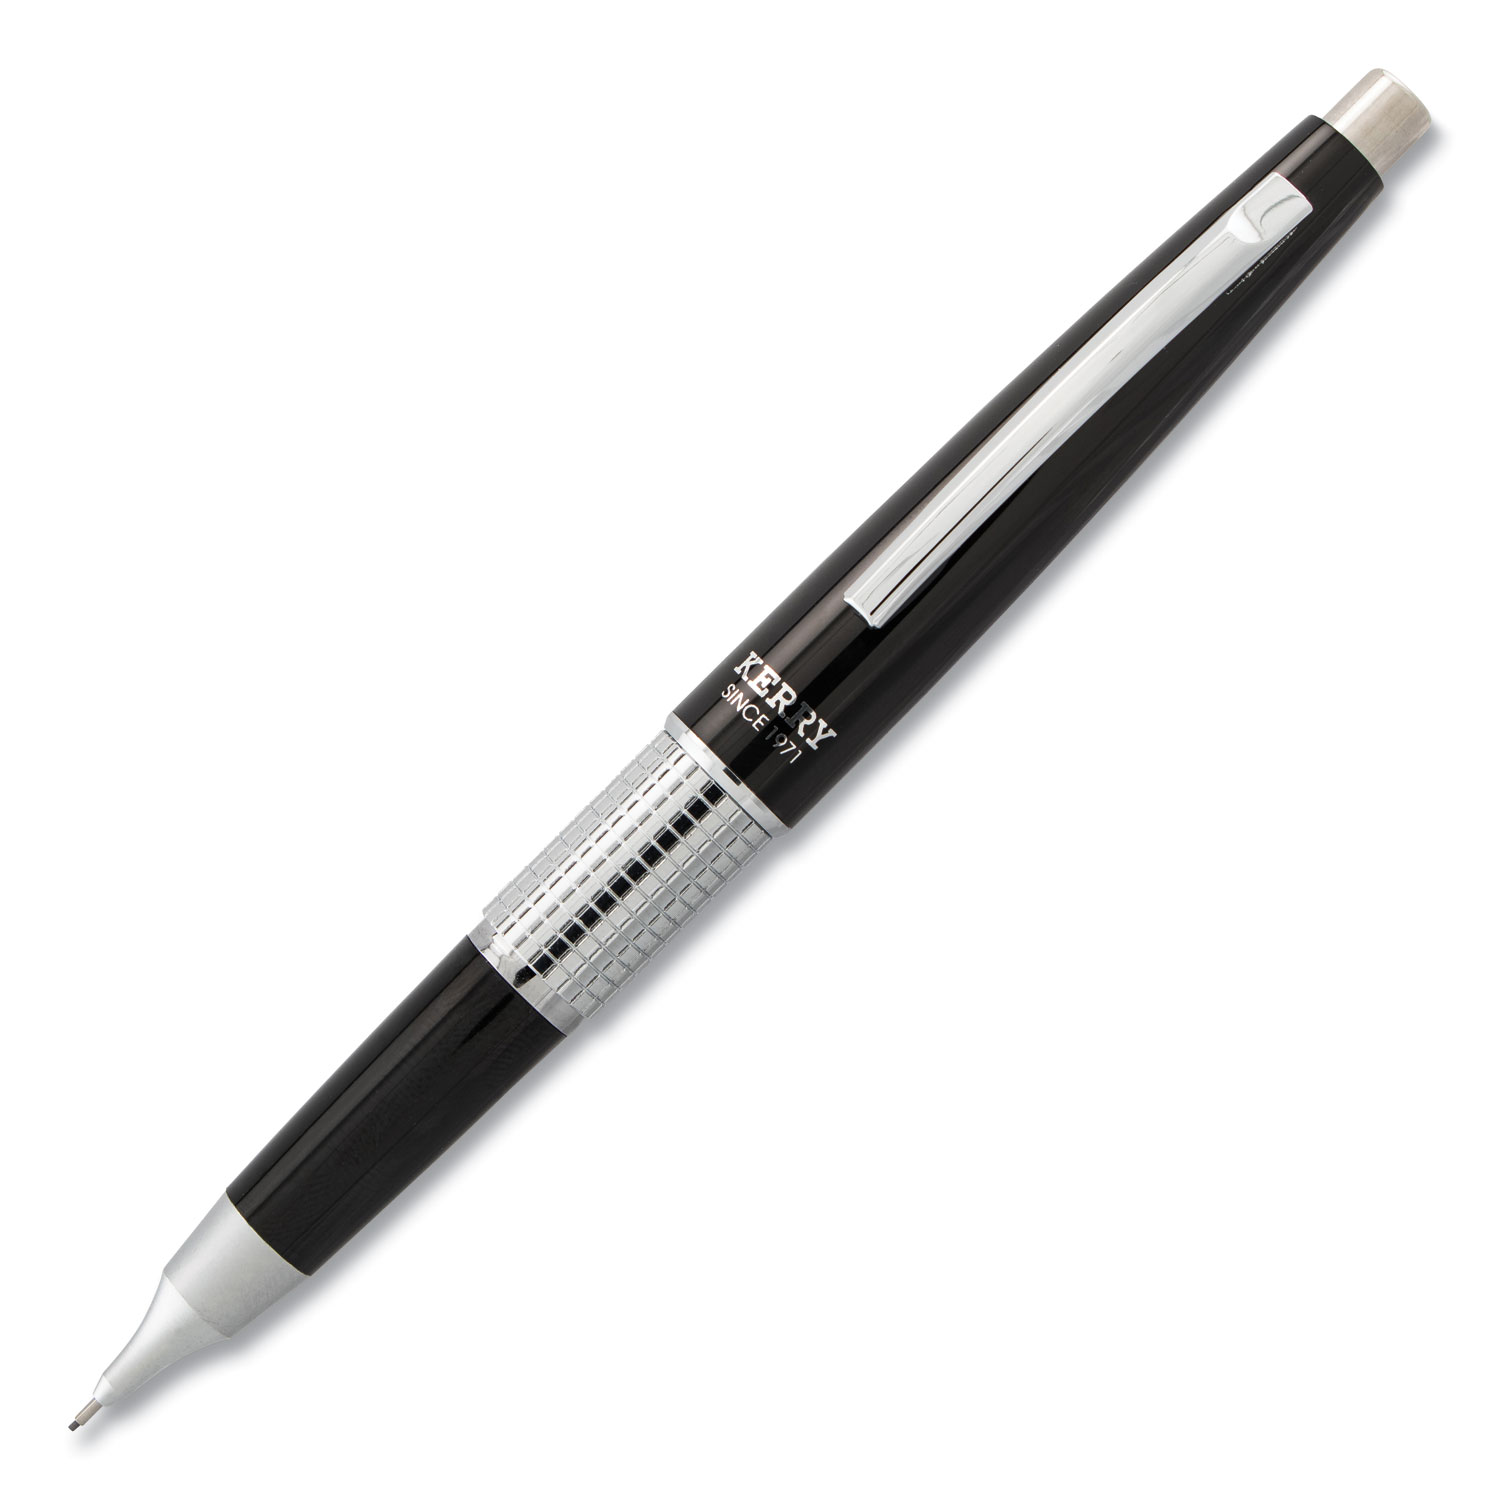  Pentel P1035A Sharp Kerry Mechanical Pencil, 0.5 mm, HB (#2.5), Black Lead, Black Barrel (PENP1035A) 